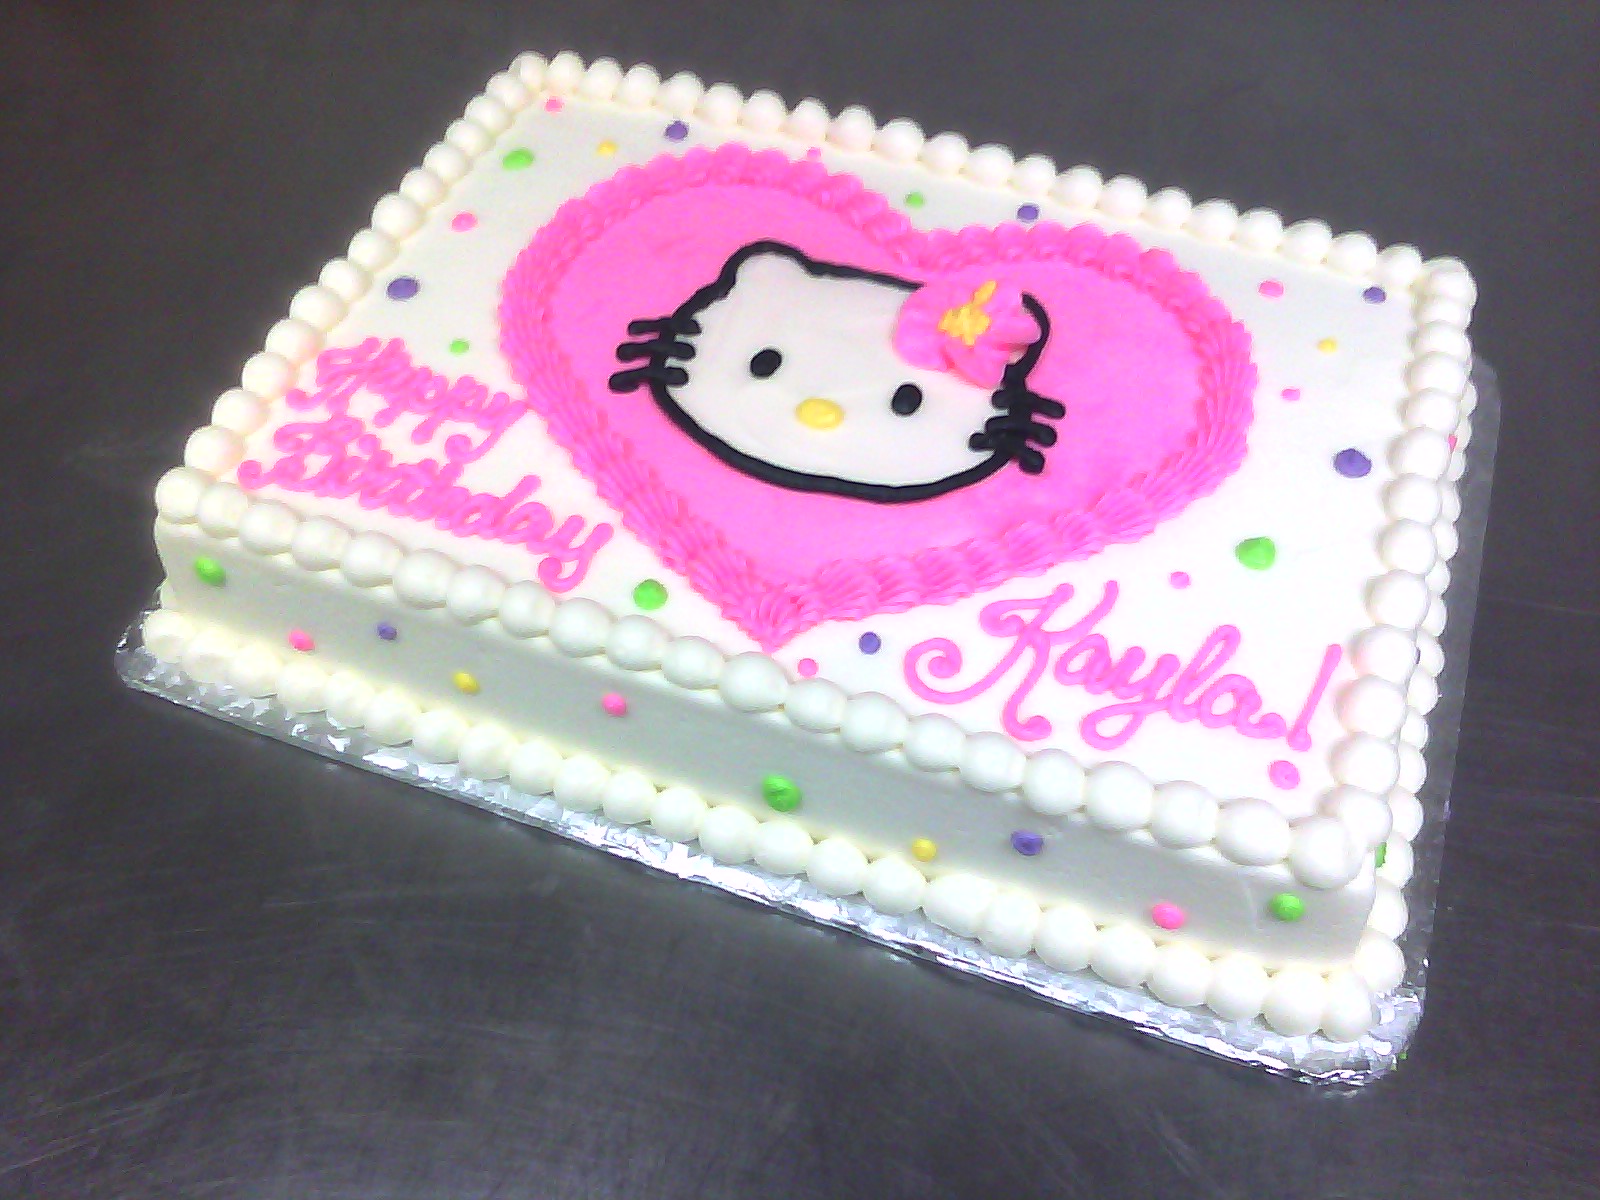 HELLO KITTY CAKE DESIGN / HOW TO DECORATE HELLO KITTY CAKE / LATEST # hellokitty #hellokittycake - YouTube